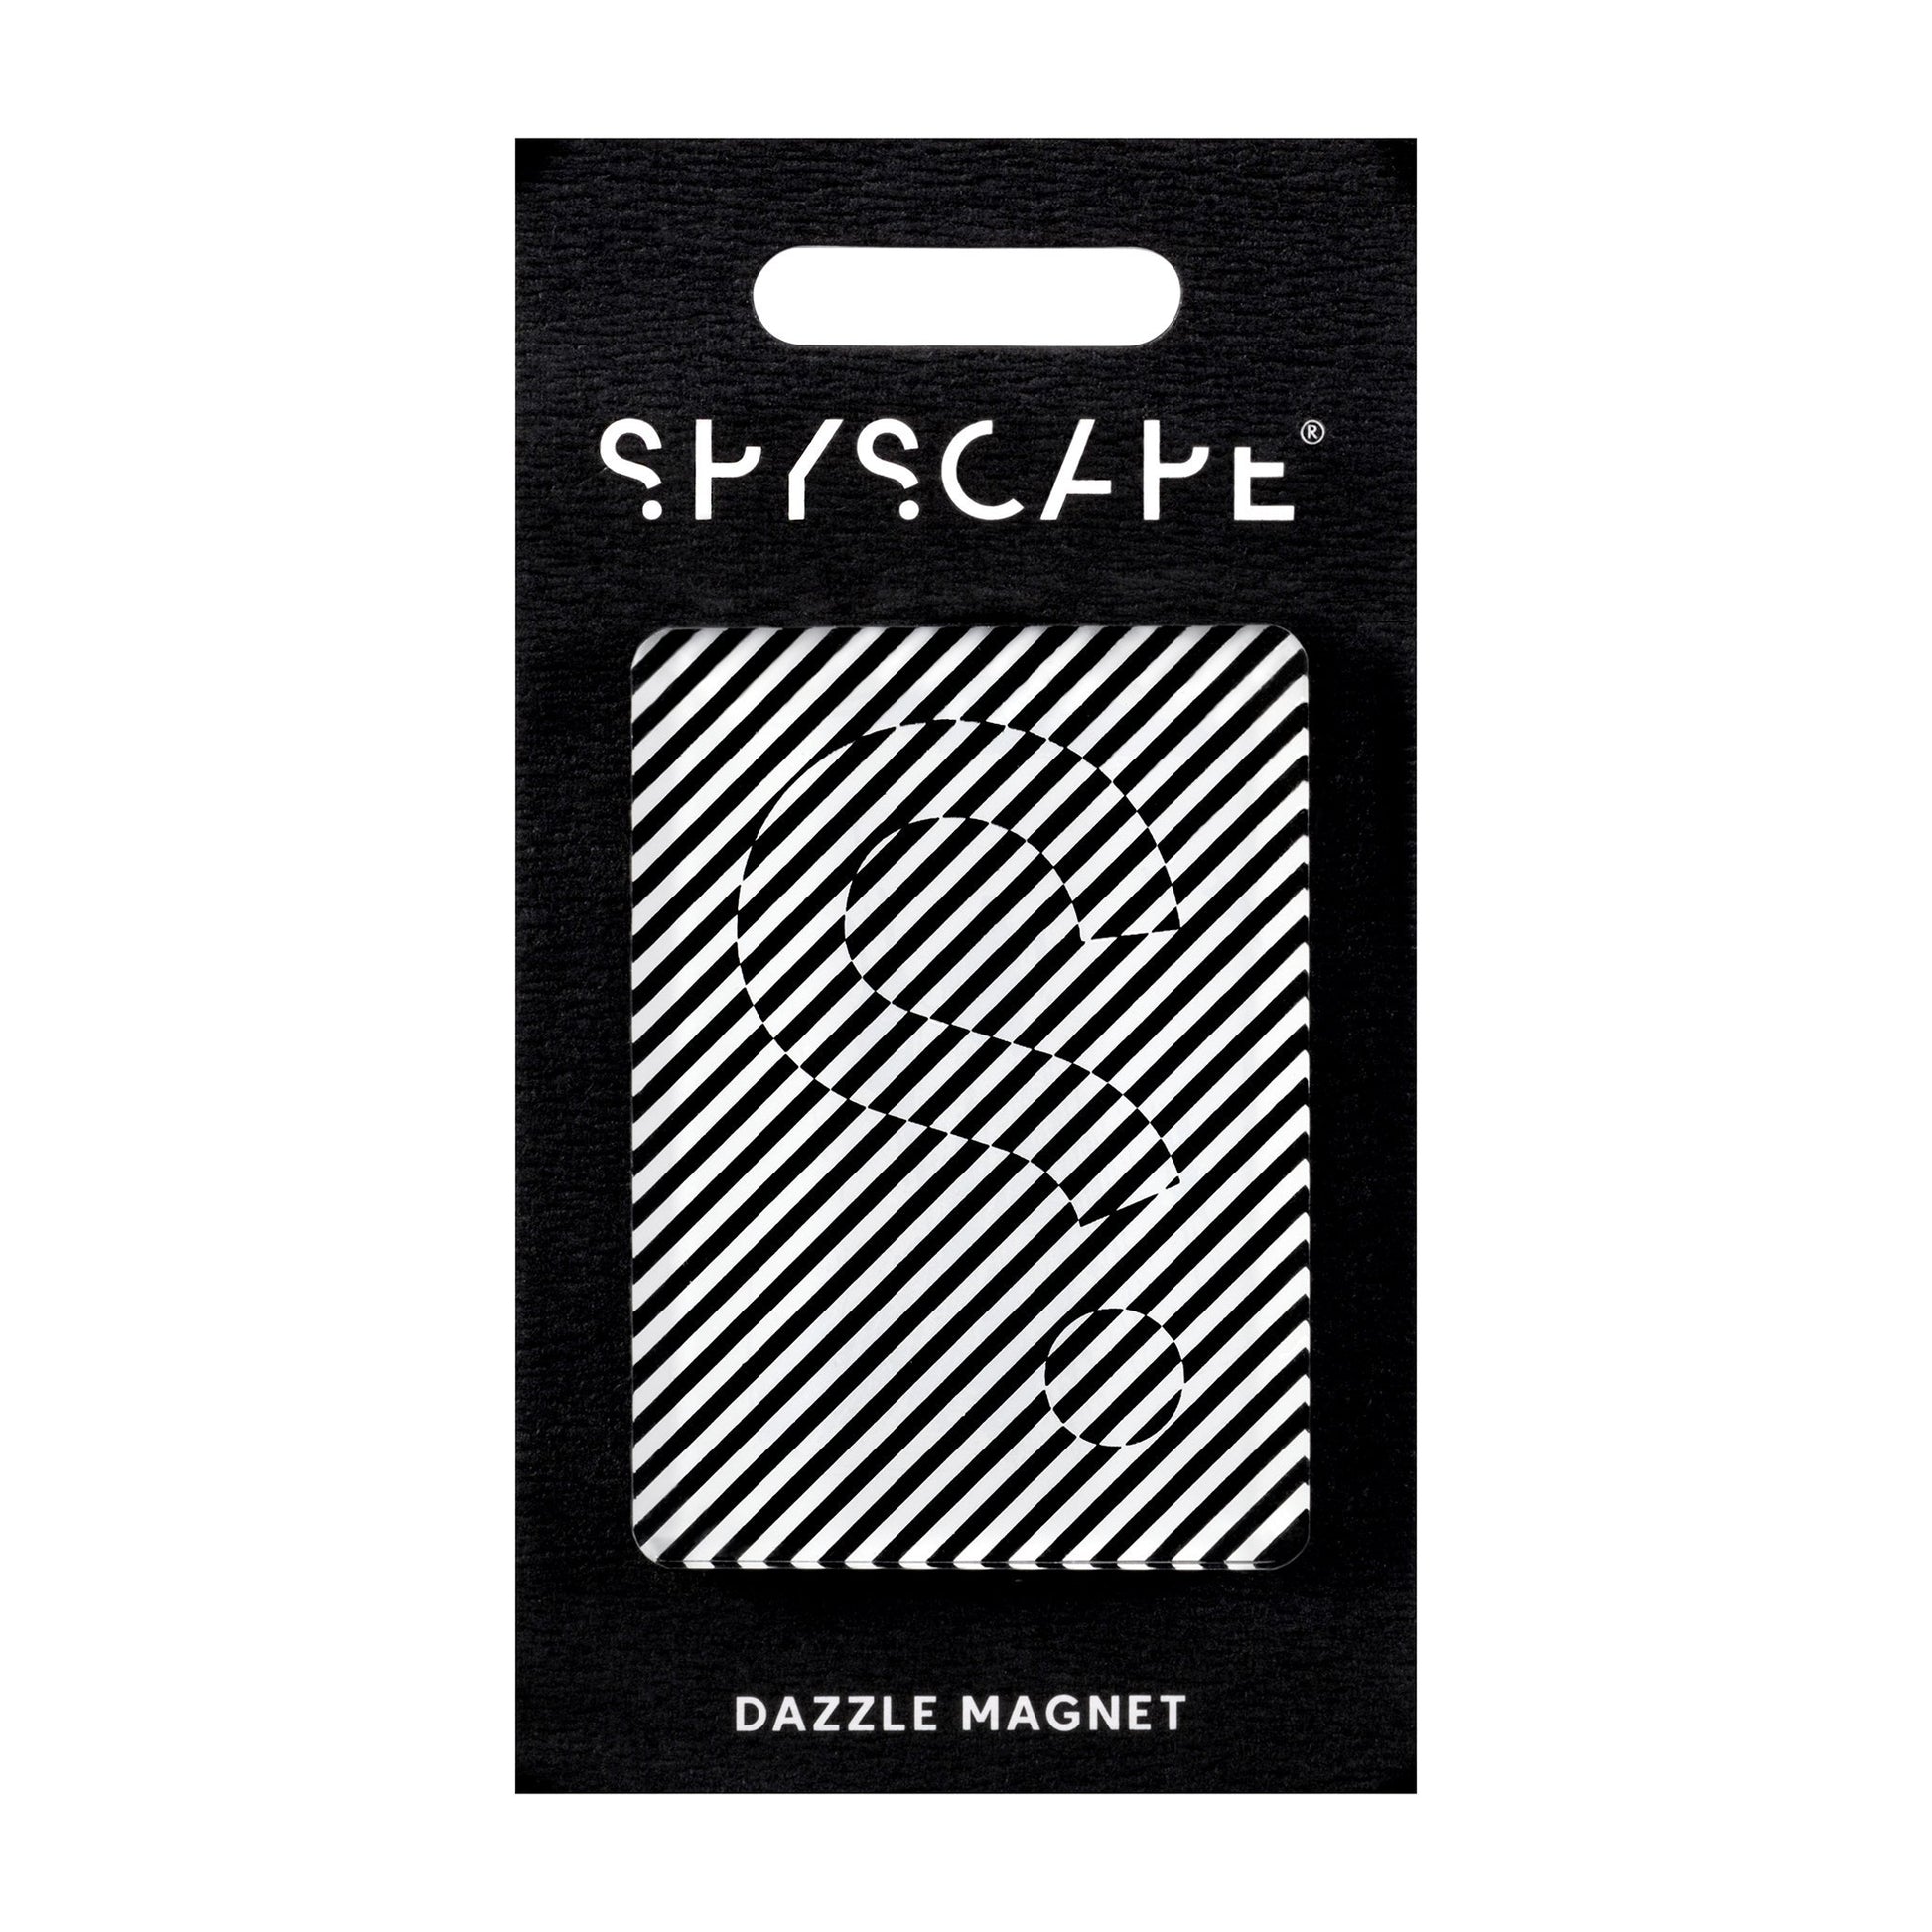 SPYSCAPE Dazzle Magnet - 